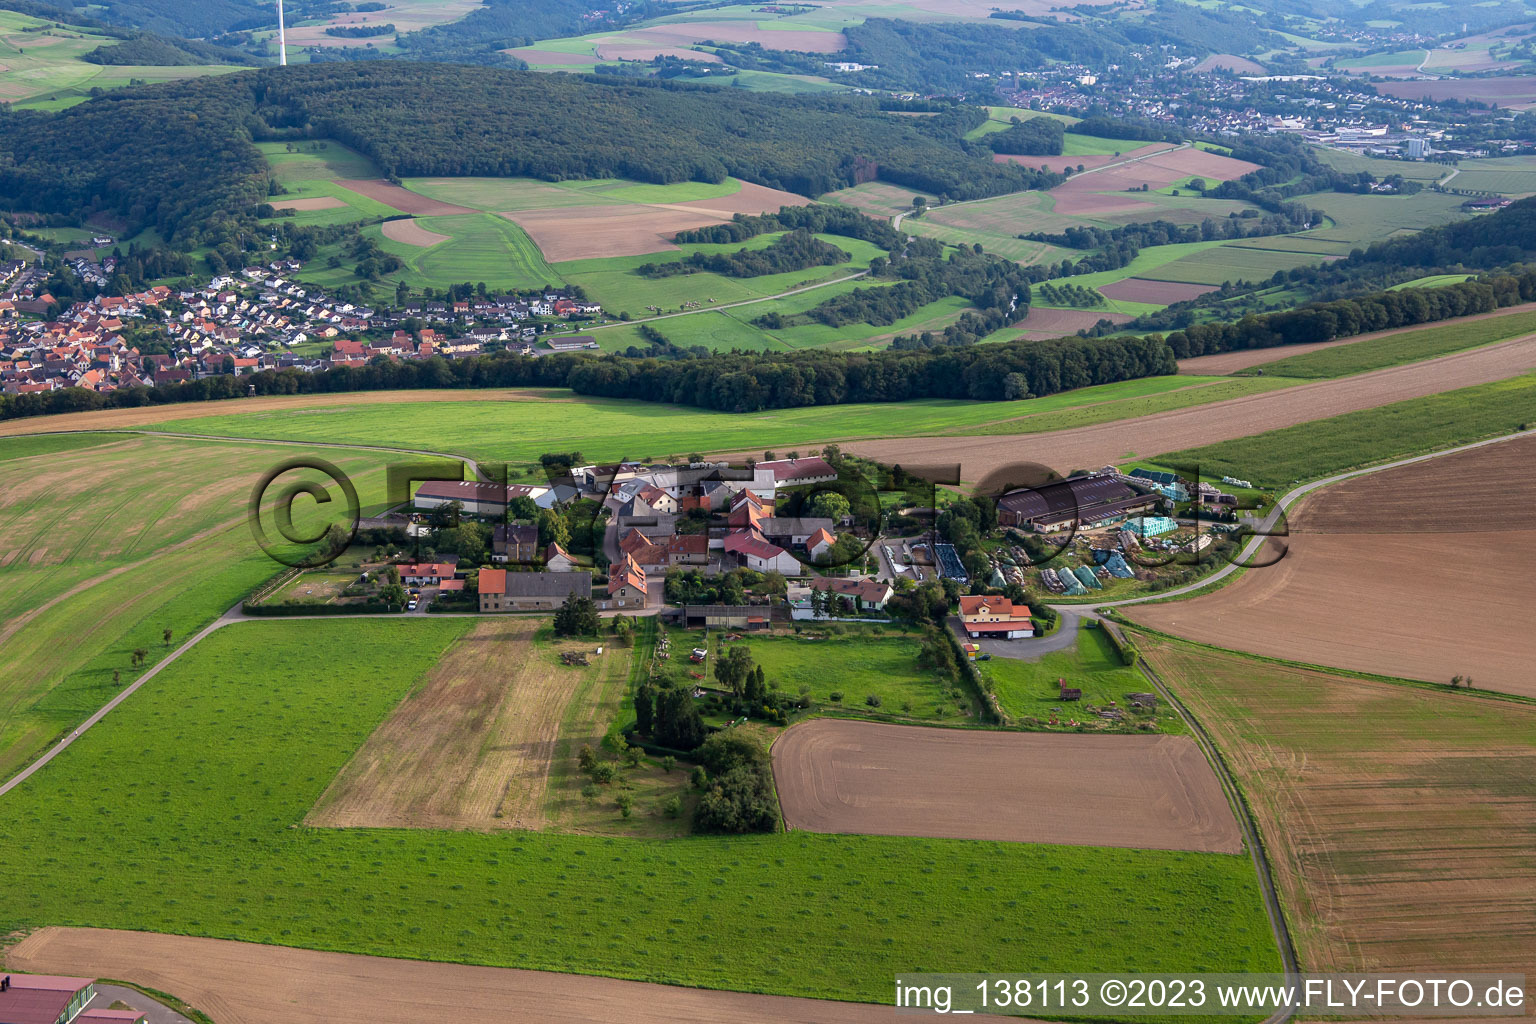 St. Antoniushof in Abtweiler in the state Rhineland-Palatinate, Germany